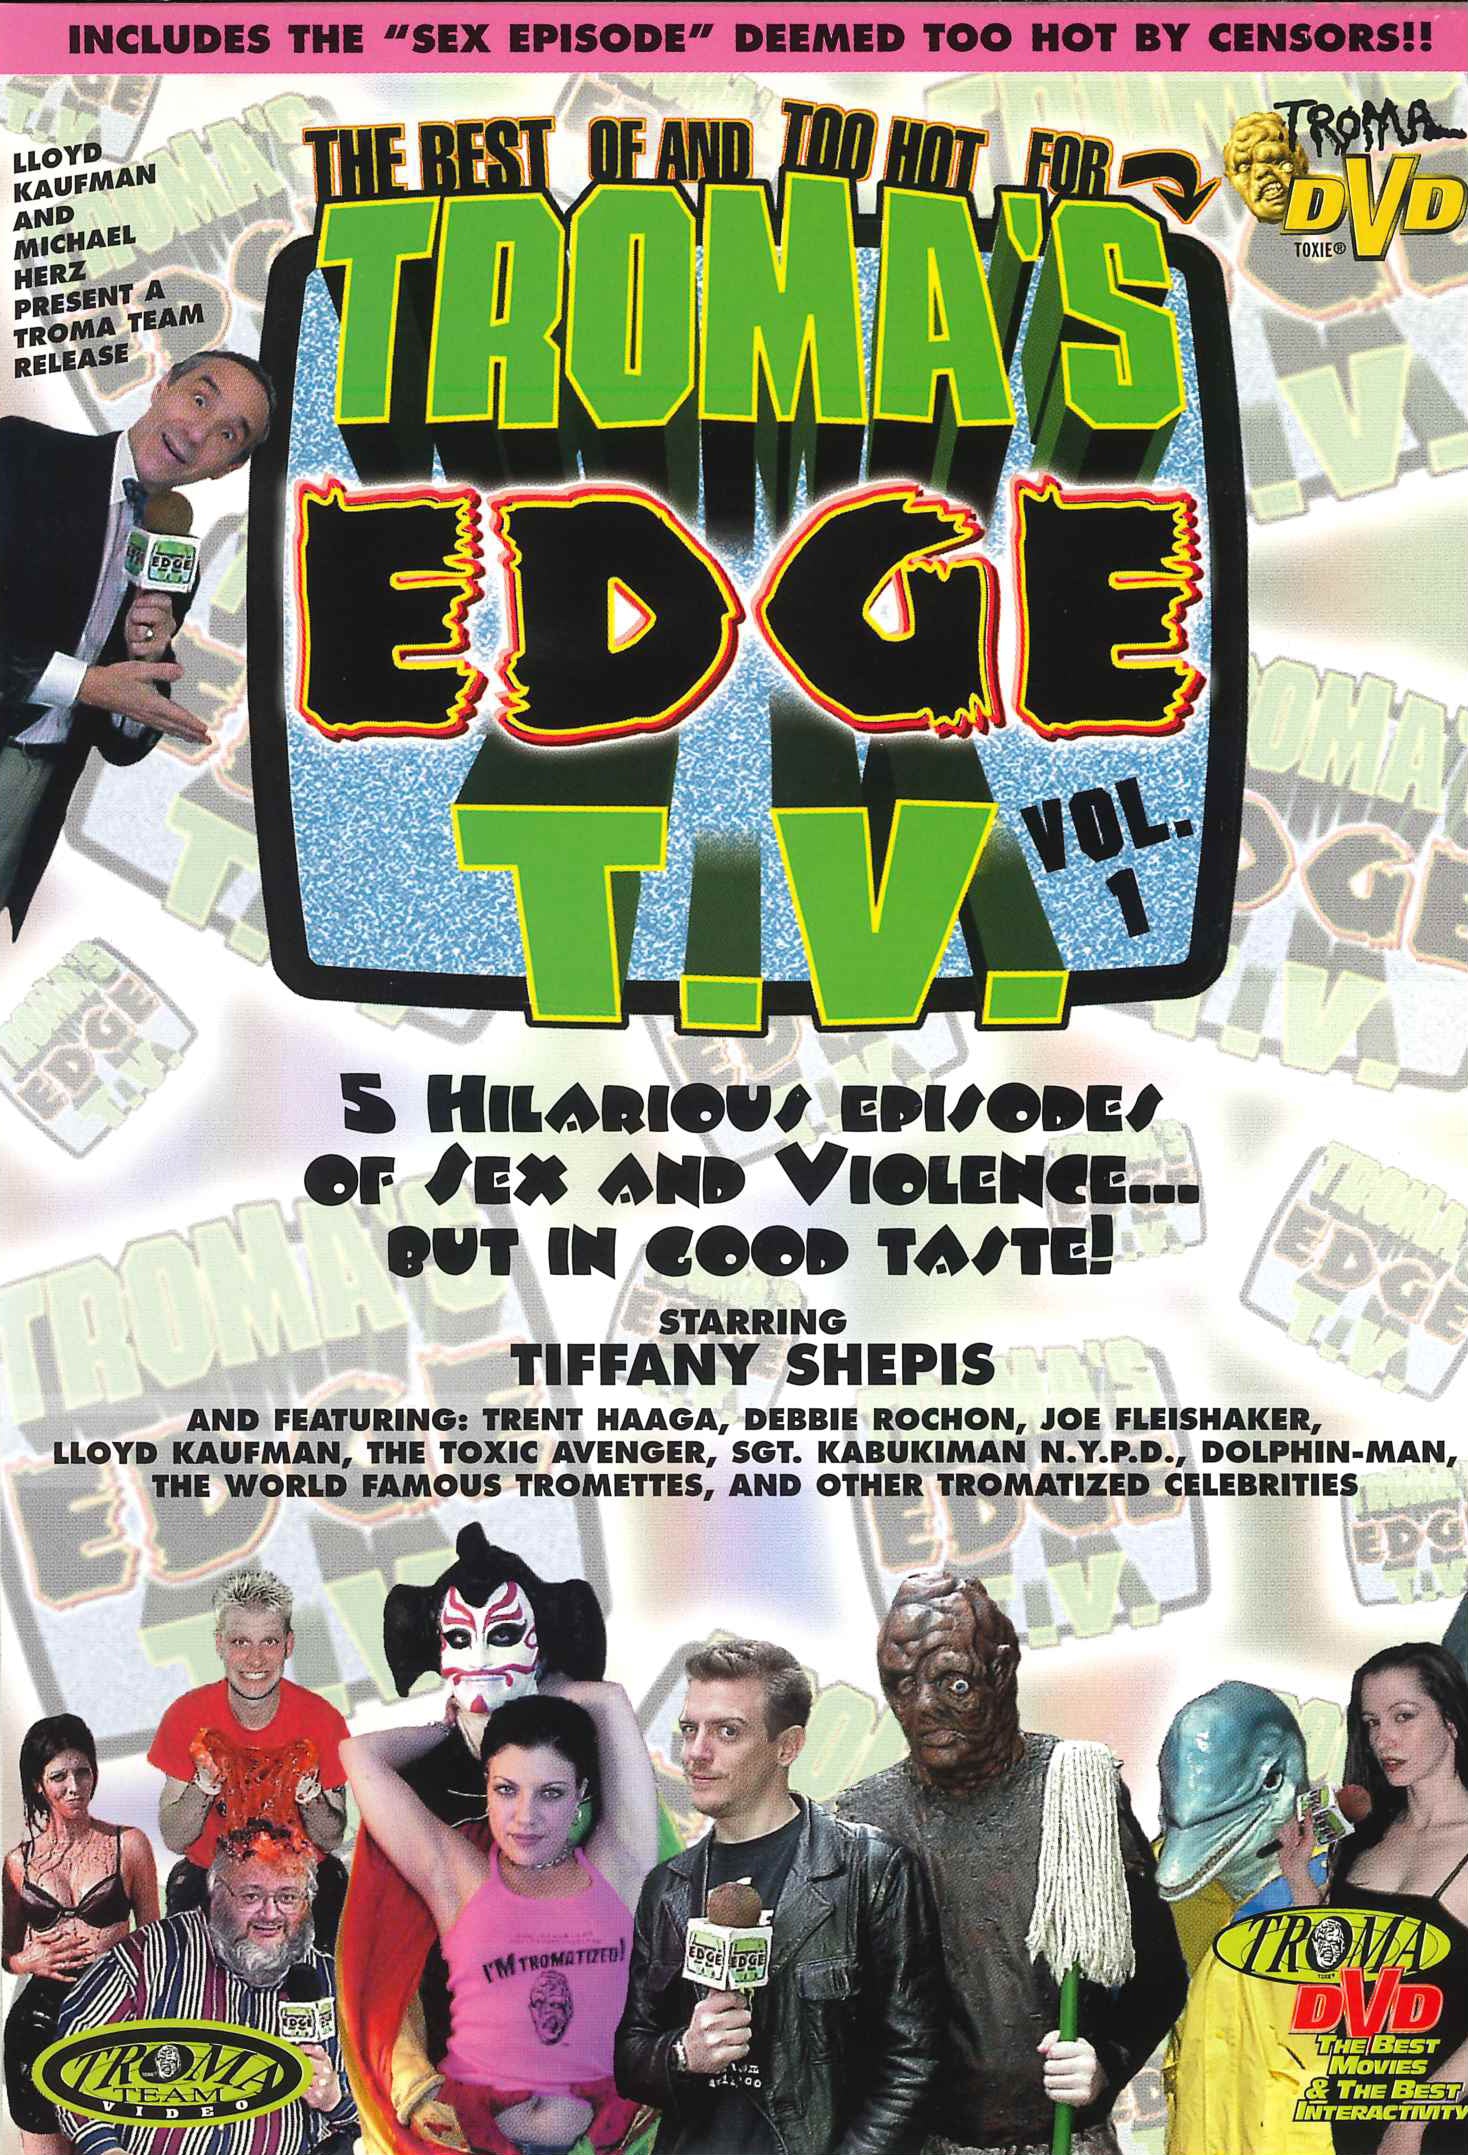 TROMA'S EDGE TV VOLUME 1 DVD